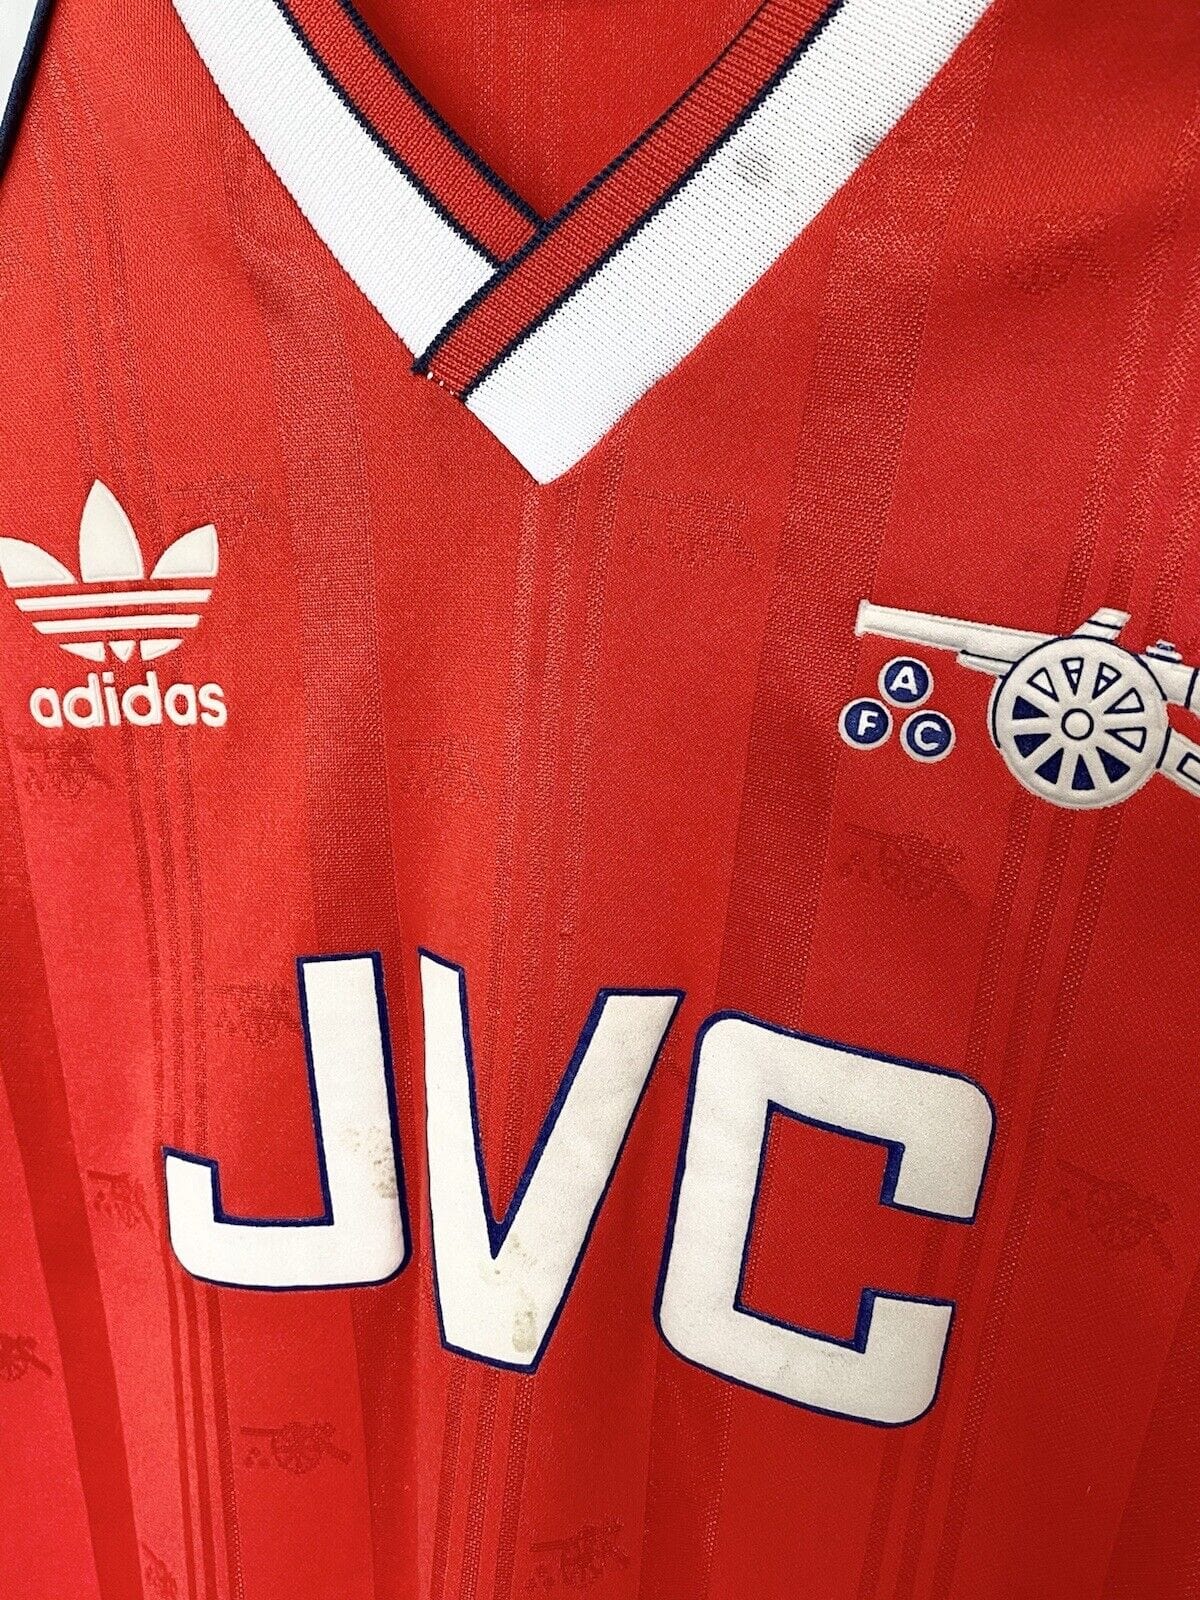 Vintage Arsenal shirts Shirt Collective